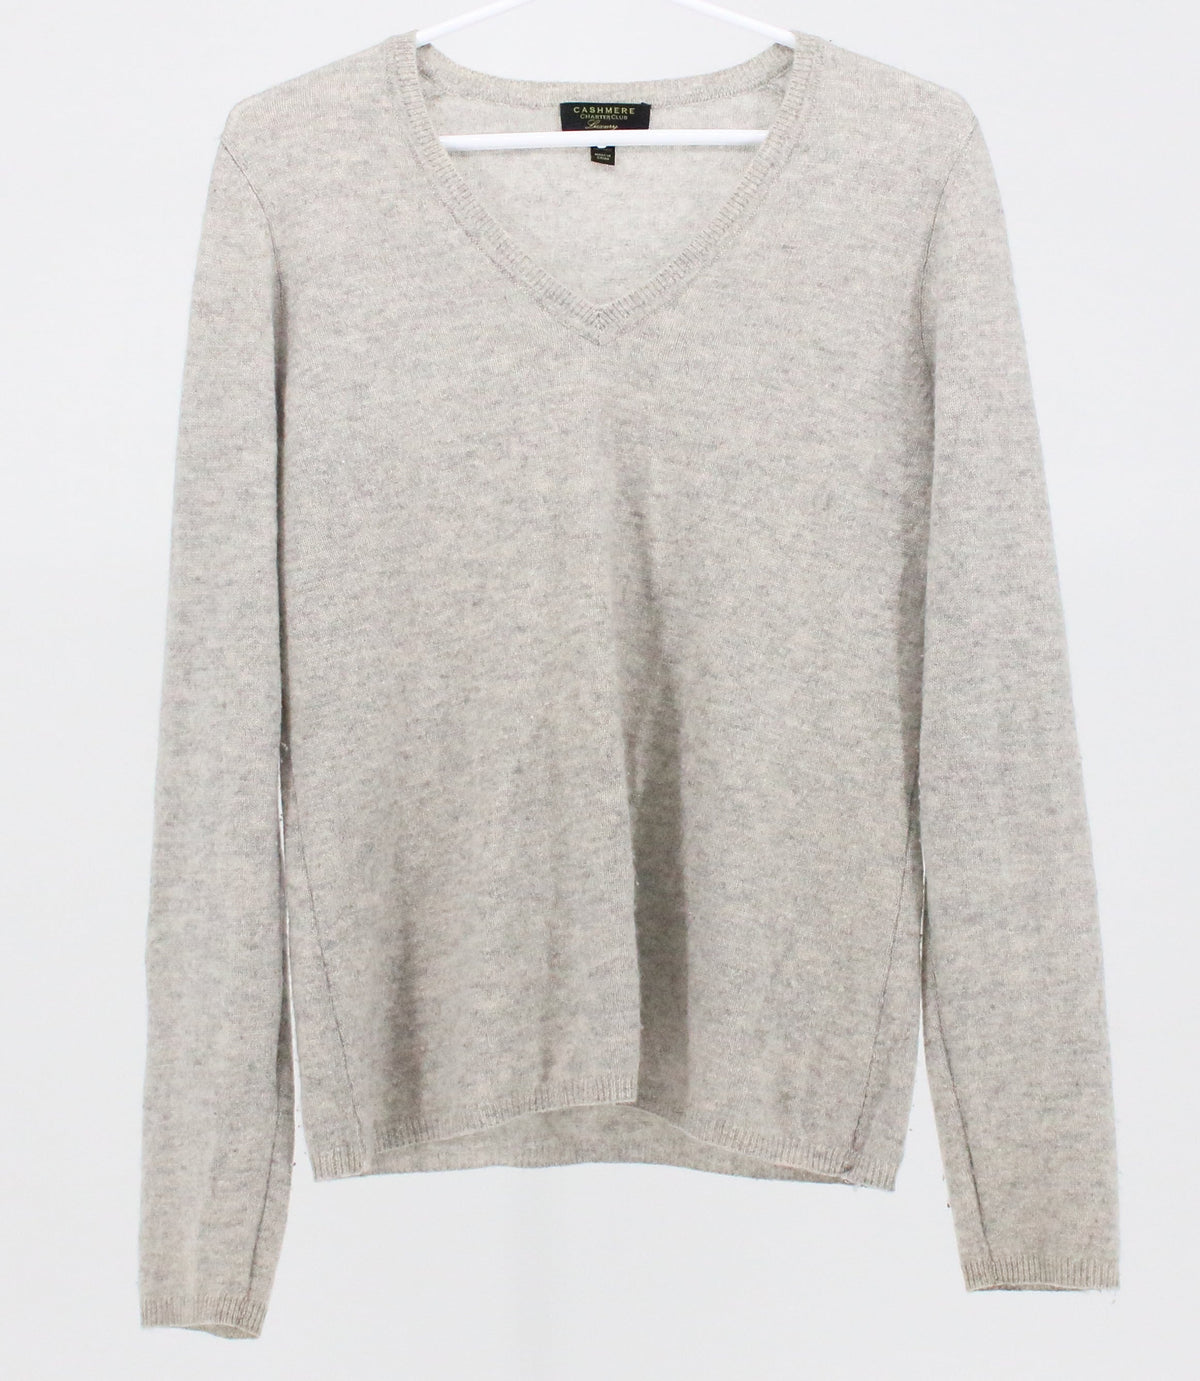 Charter Club Light Grey V Neck Cashmere Sweater